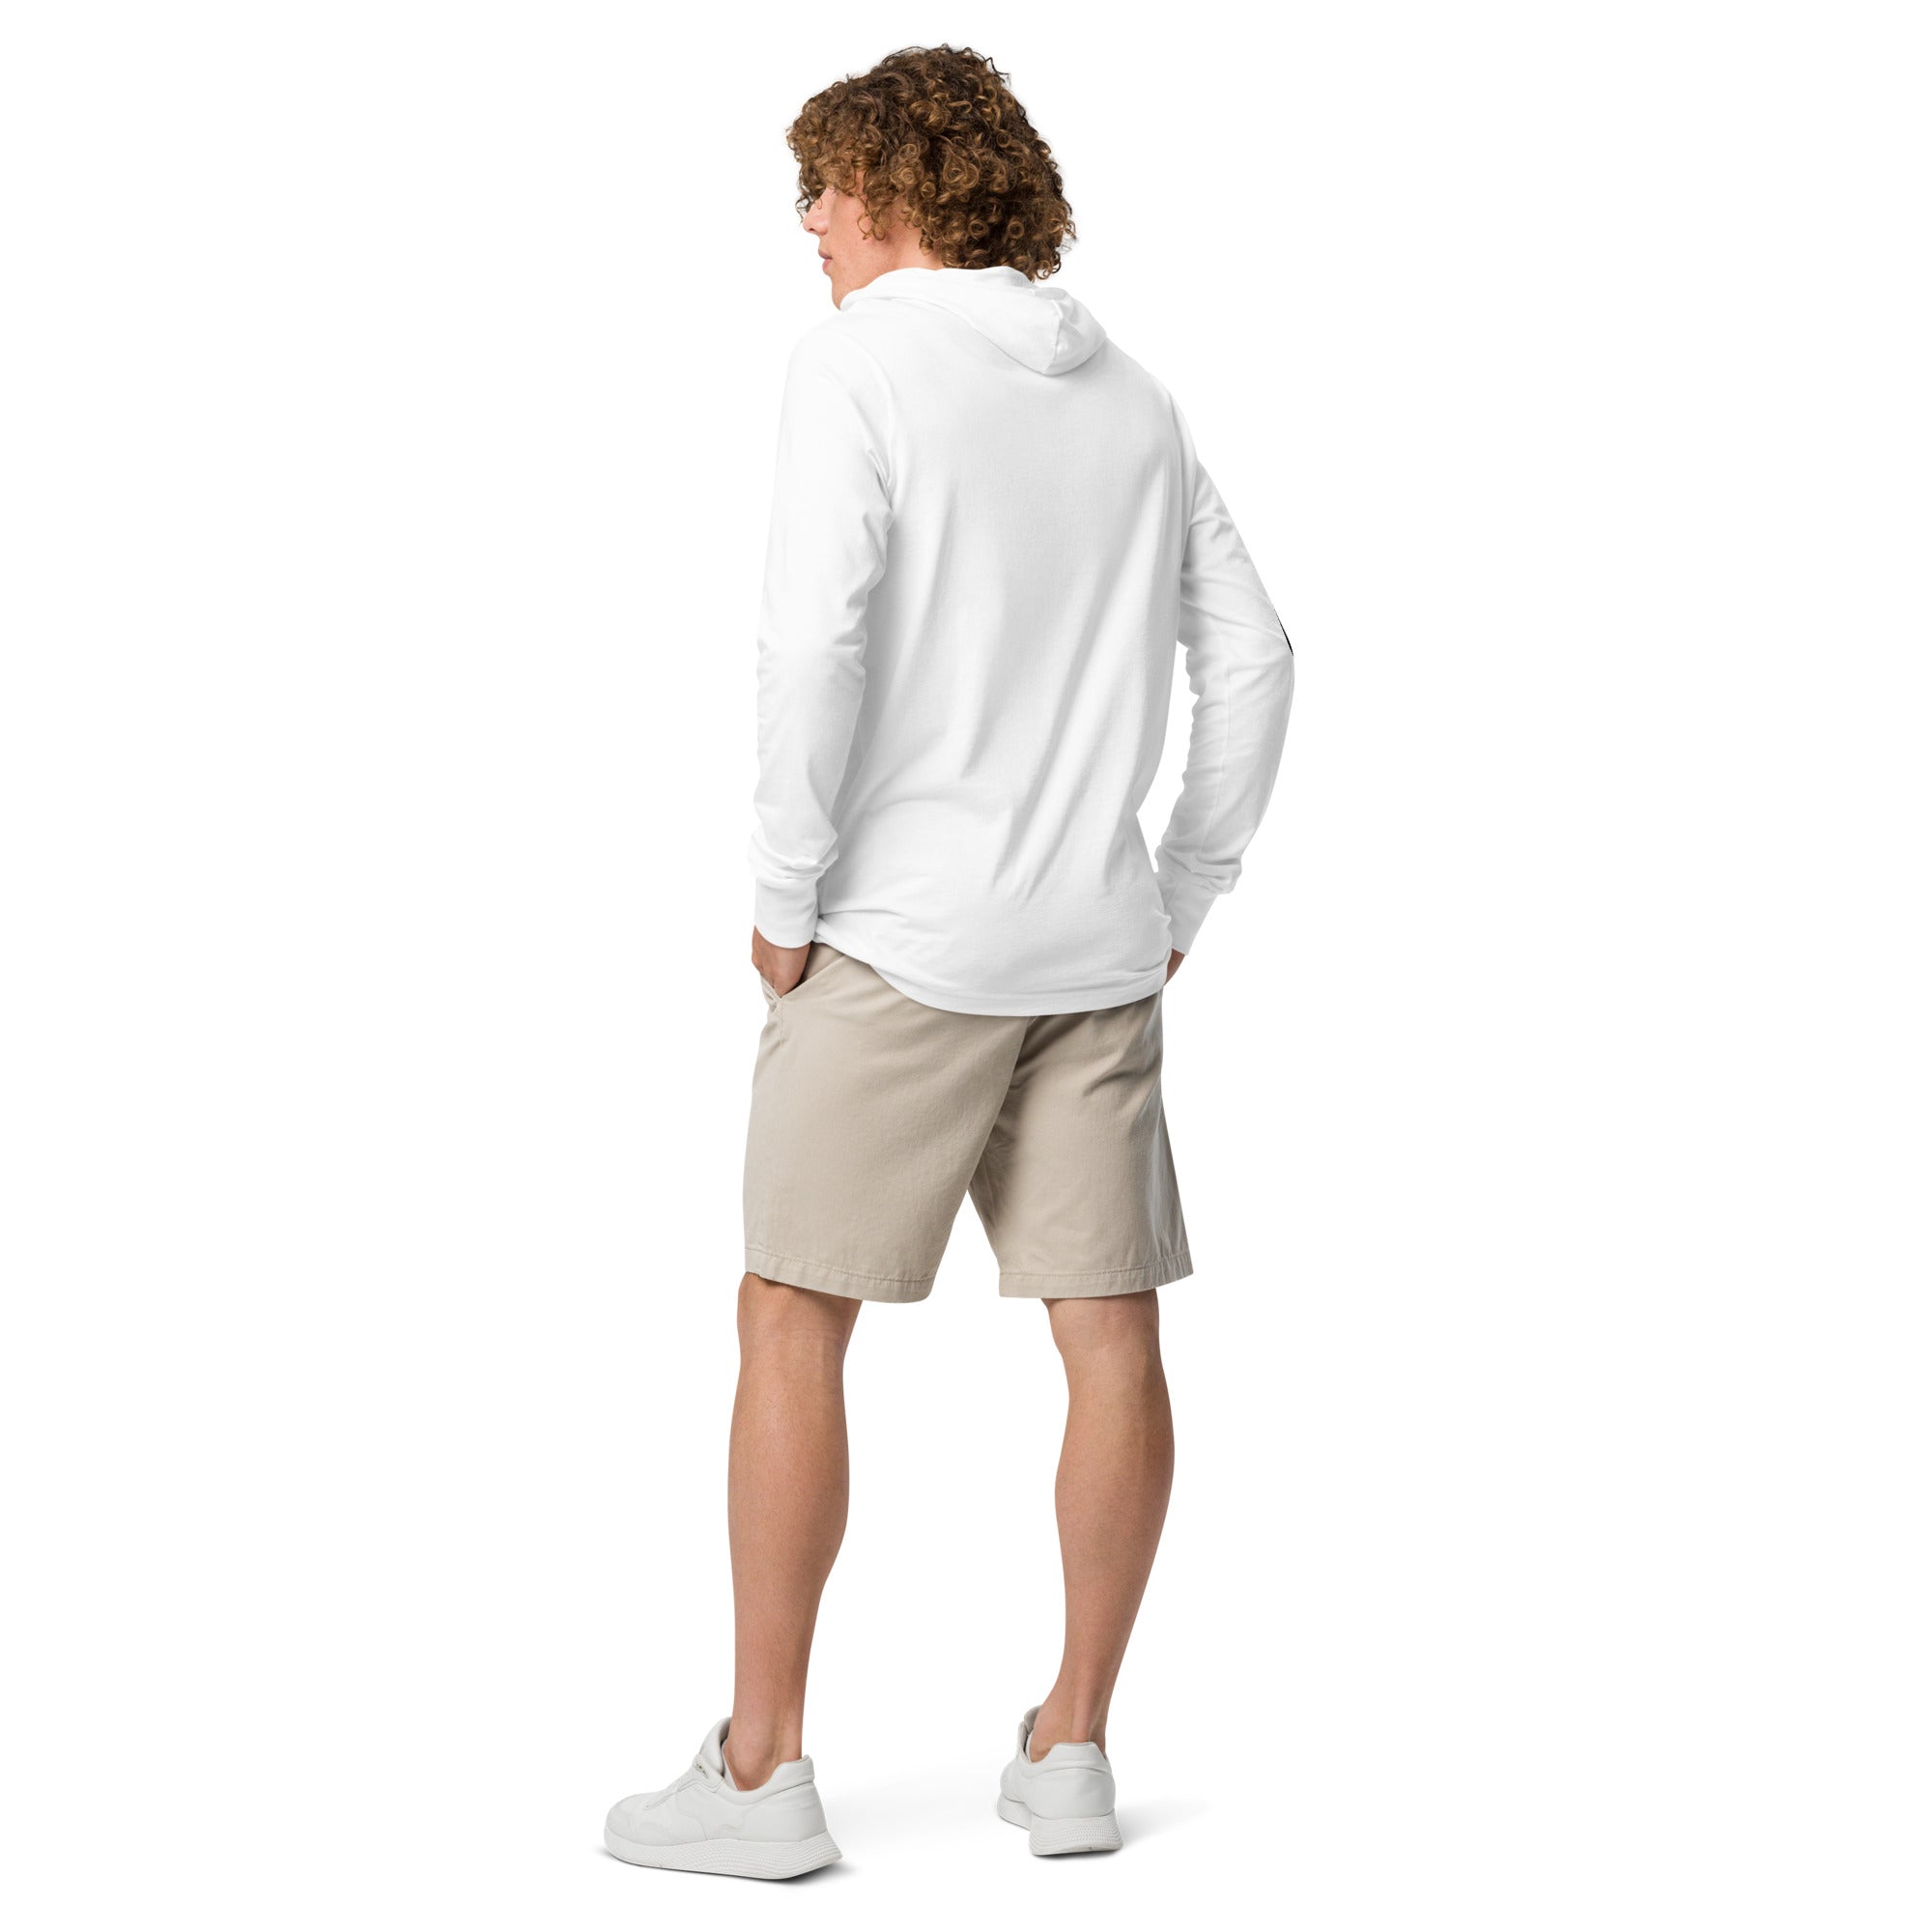 unisex-hooded-long-sleeve-tee-white-back-653fd5a453002.jpg